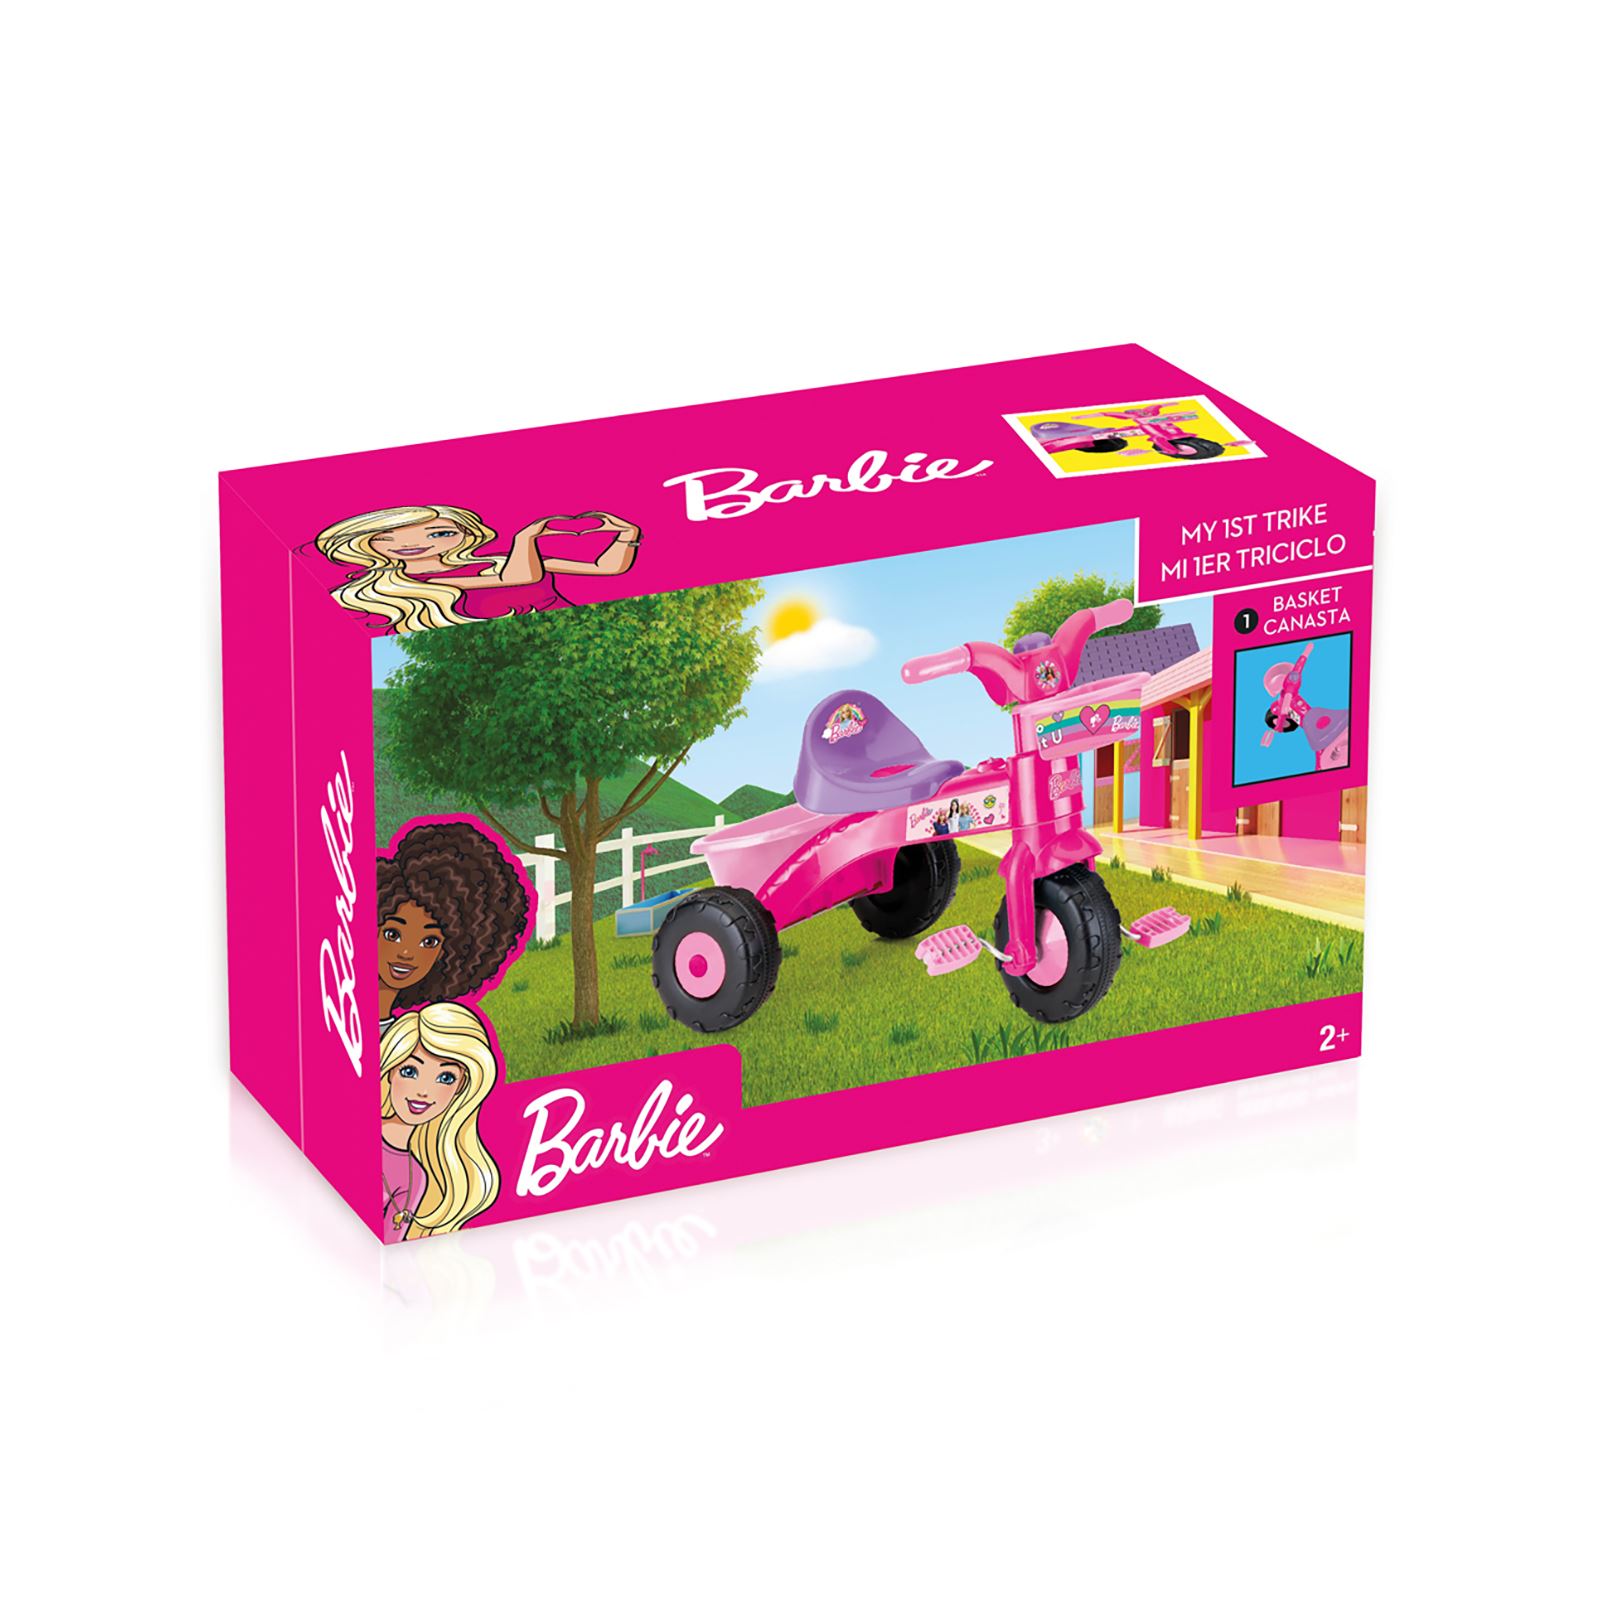 Barbie İlk Bisikletim